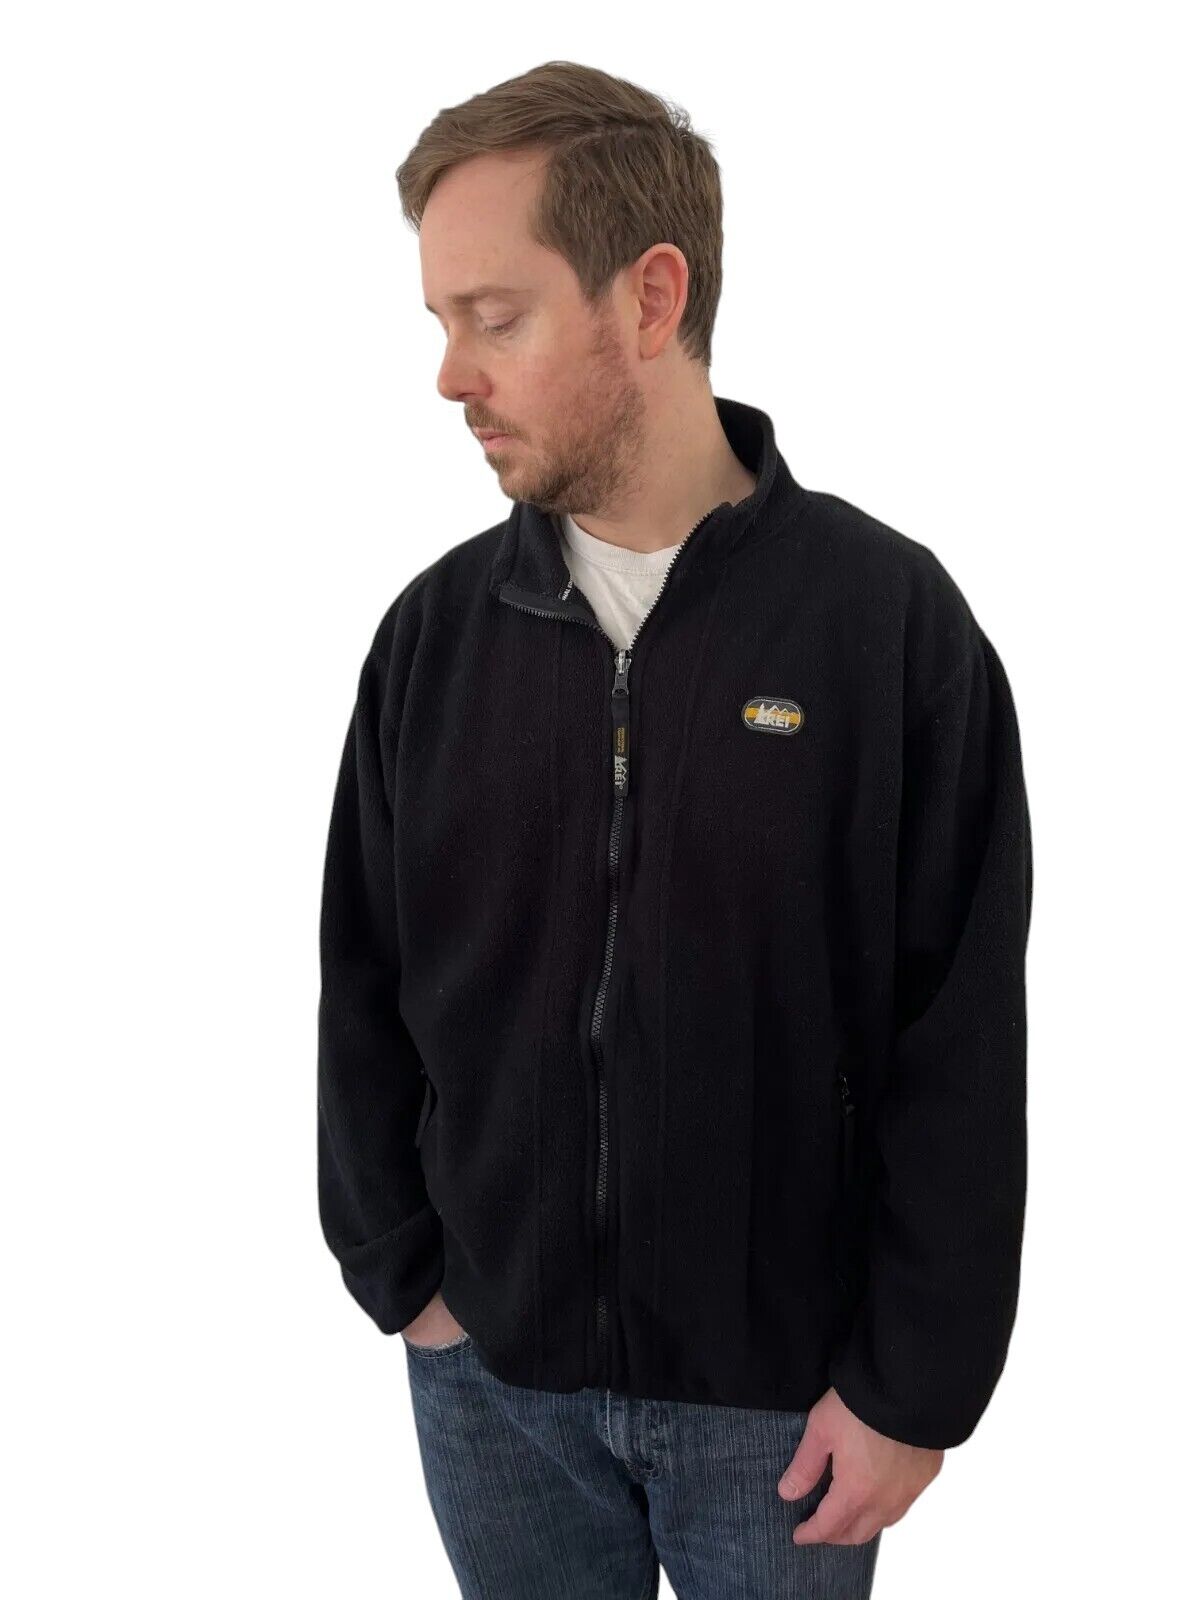 Vintage Made In USA REI Jacket Black Full Zip Polartec Fleece Mens Size Large L